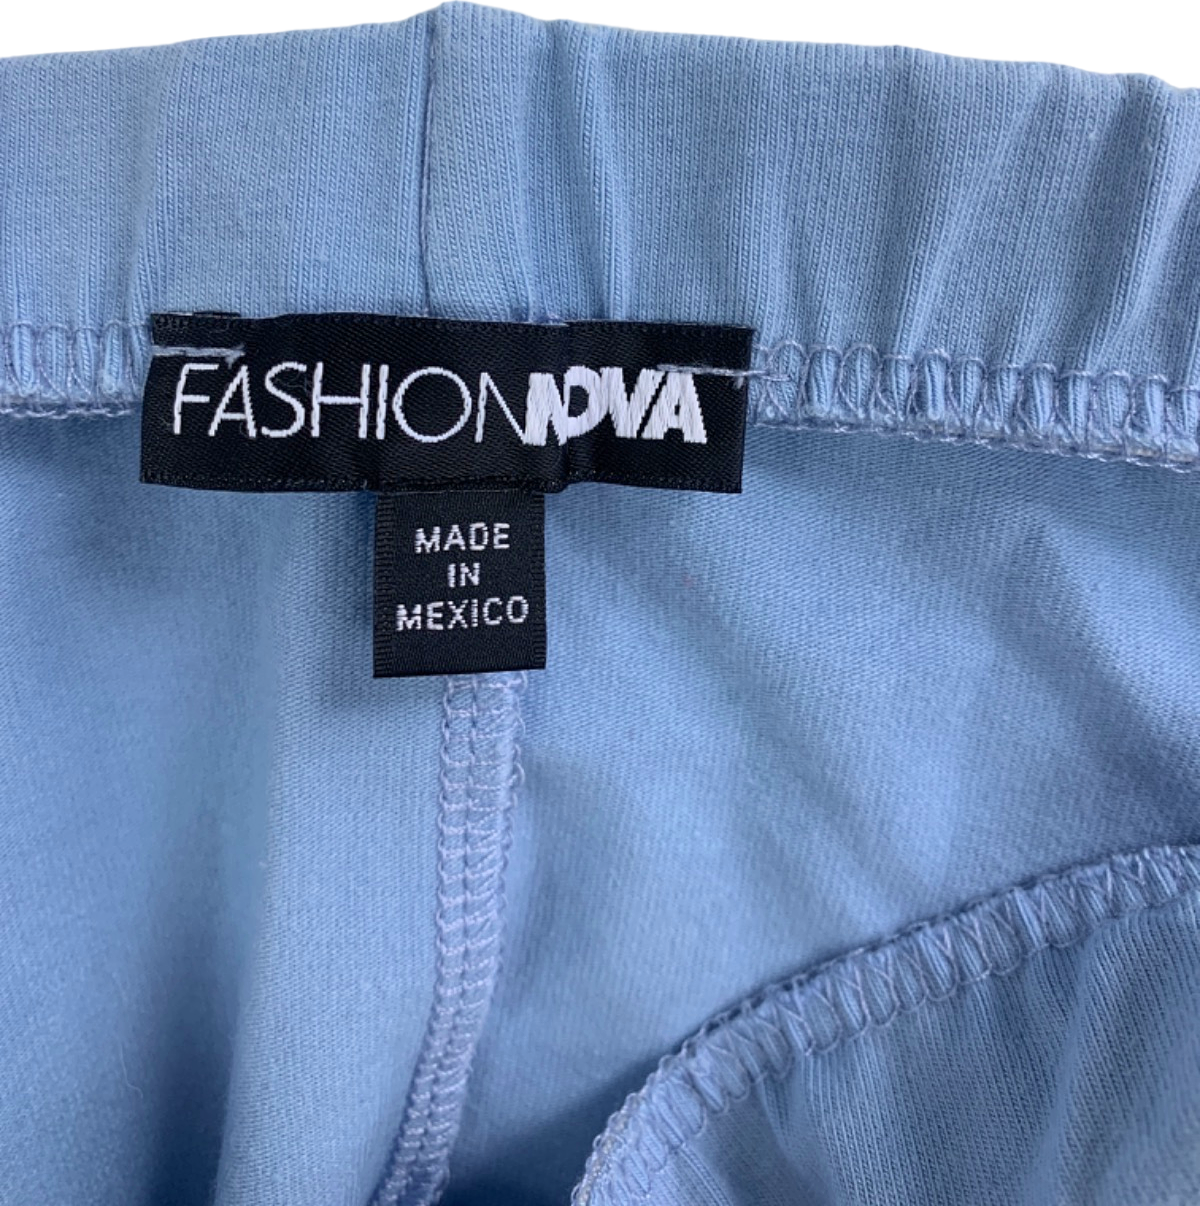 Fashion Nova Blue Pencil Skirt XS